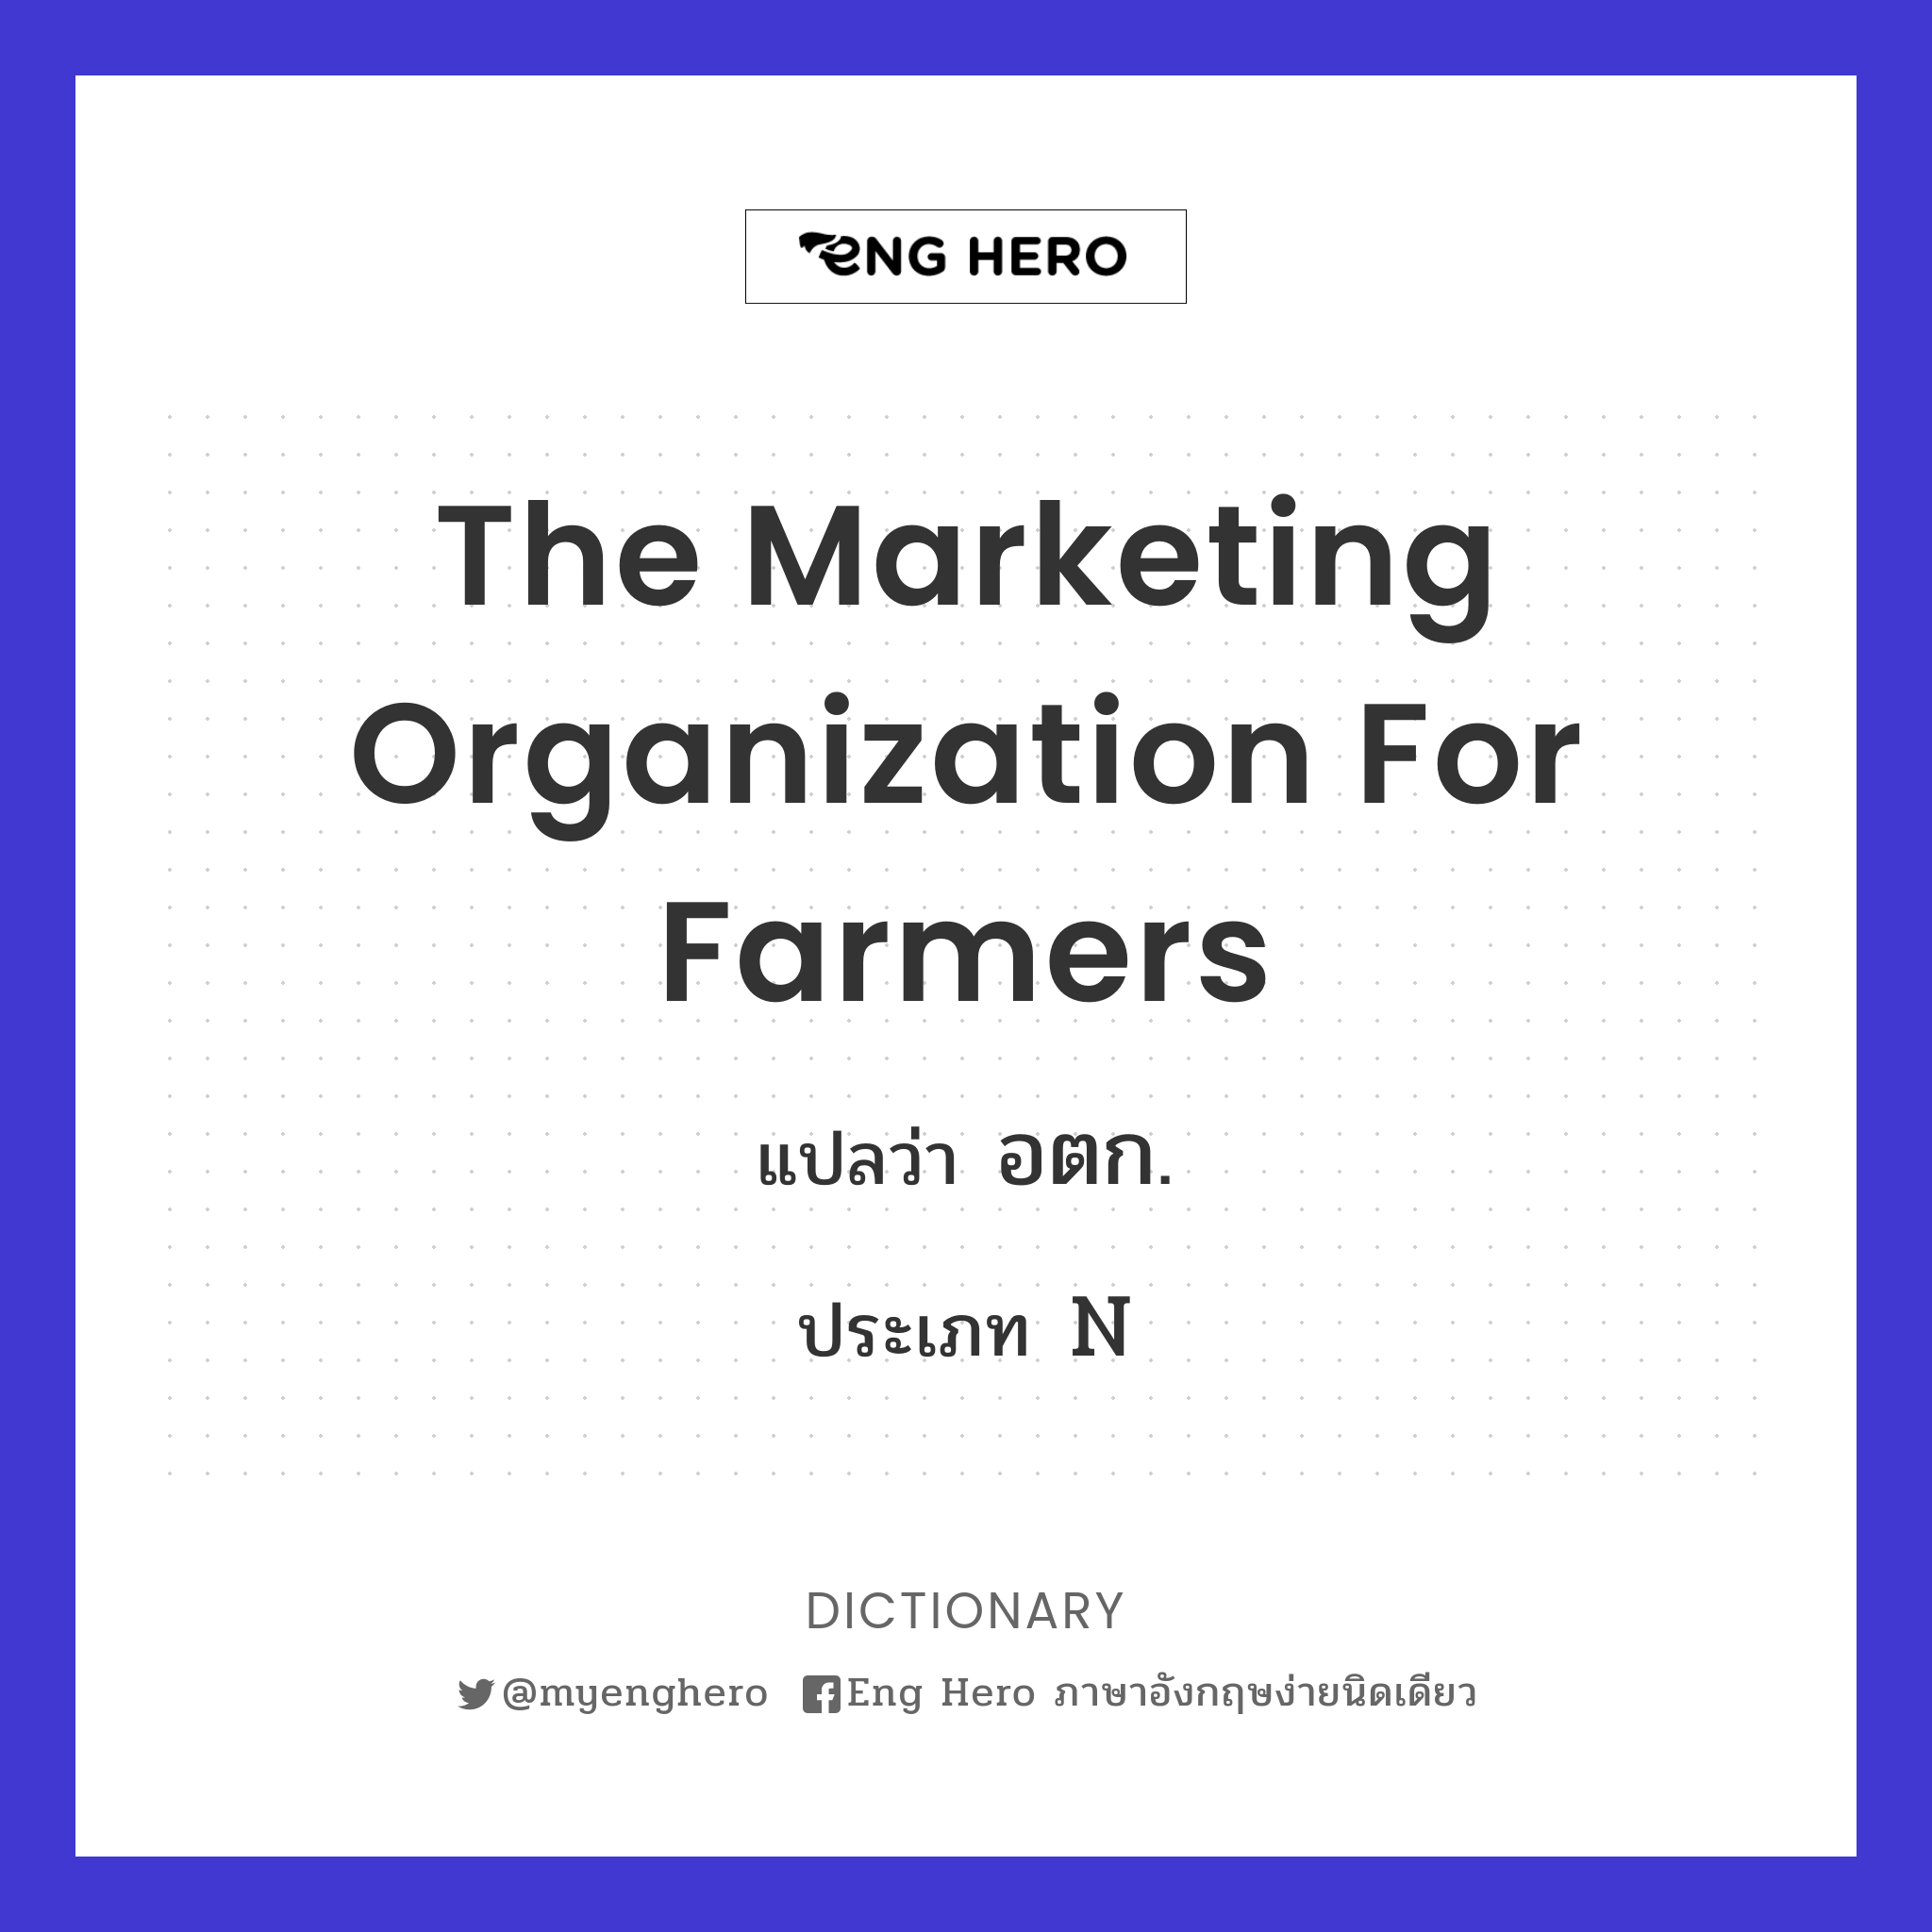 The Marketing Organization for Farmers